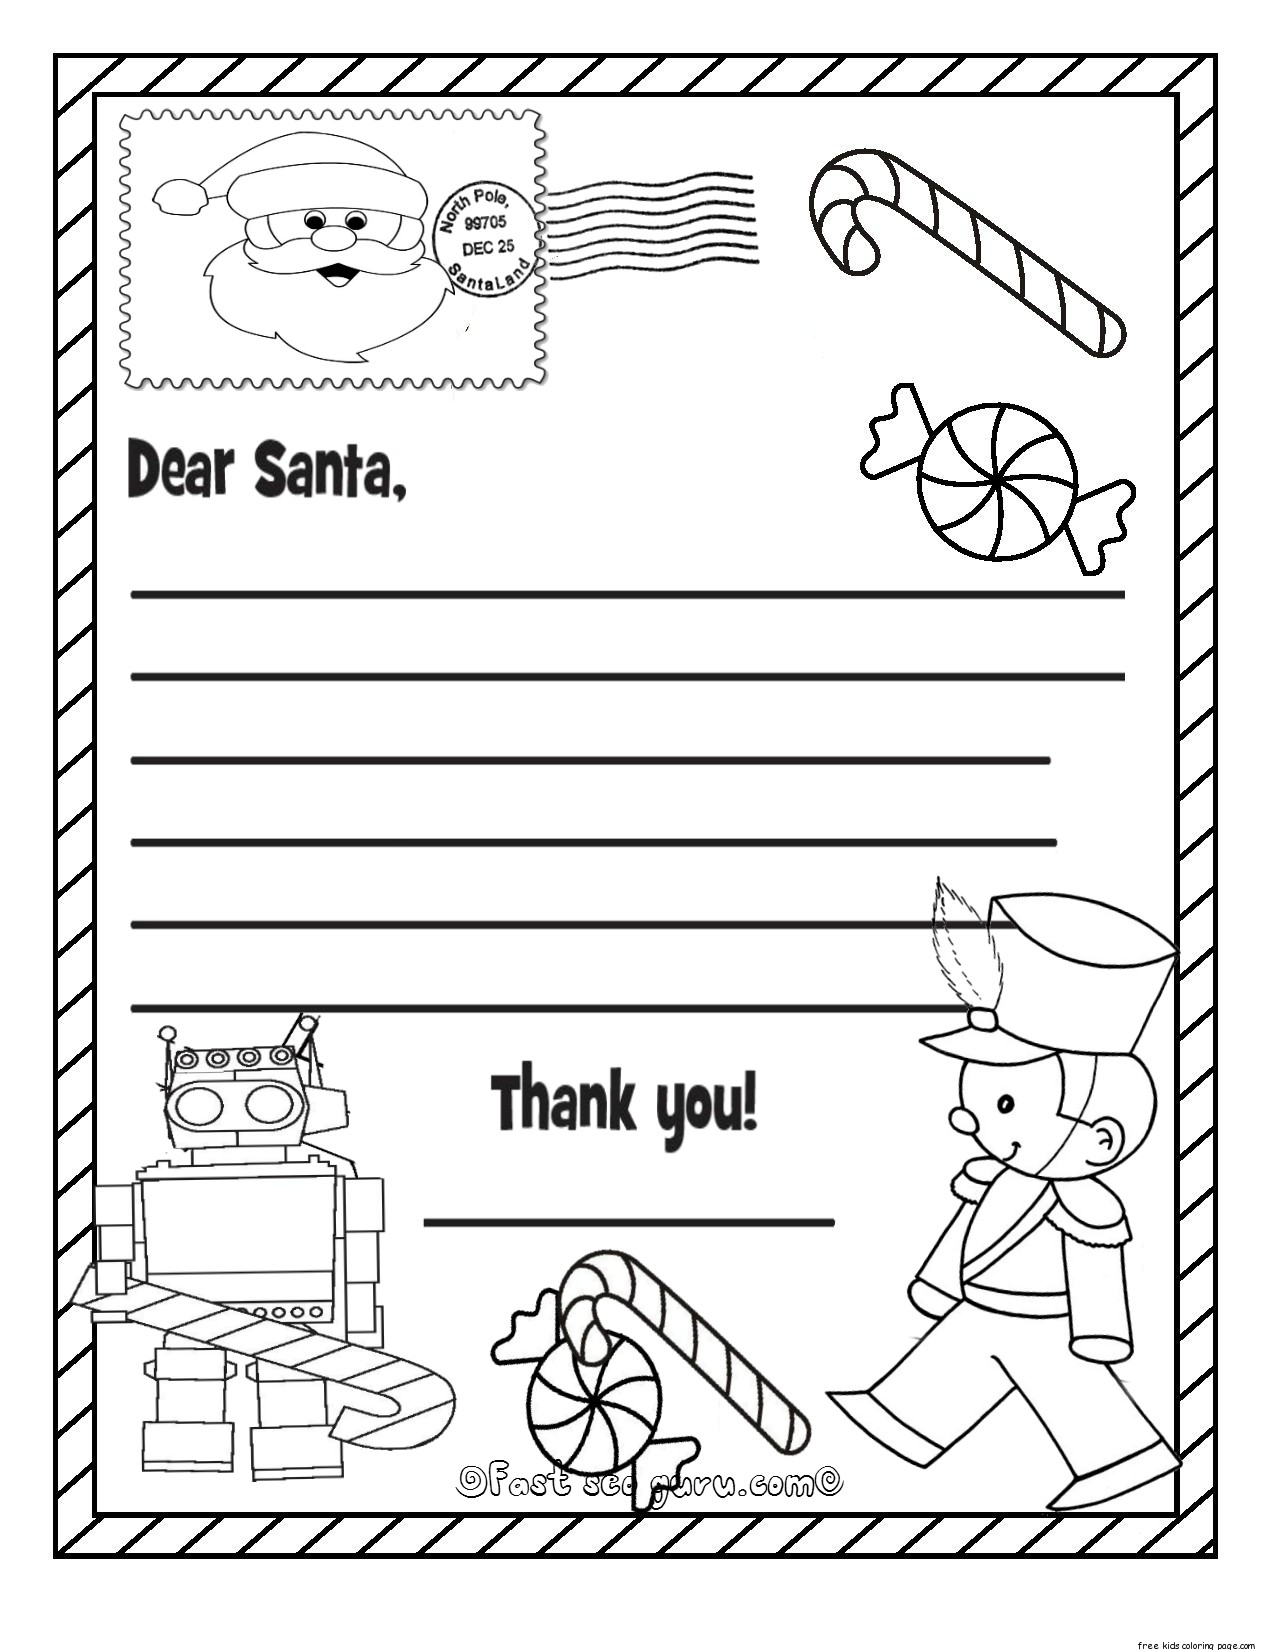 Printable Christmas Wish List To Santa Claus For Kids For KidsFree 